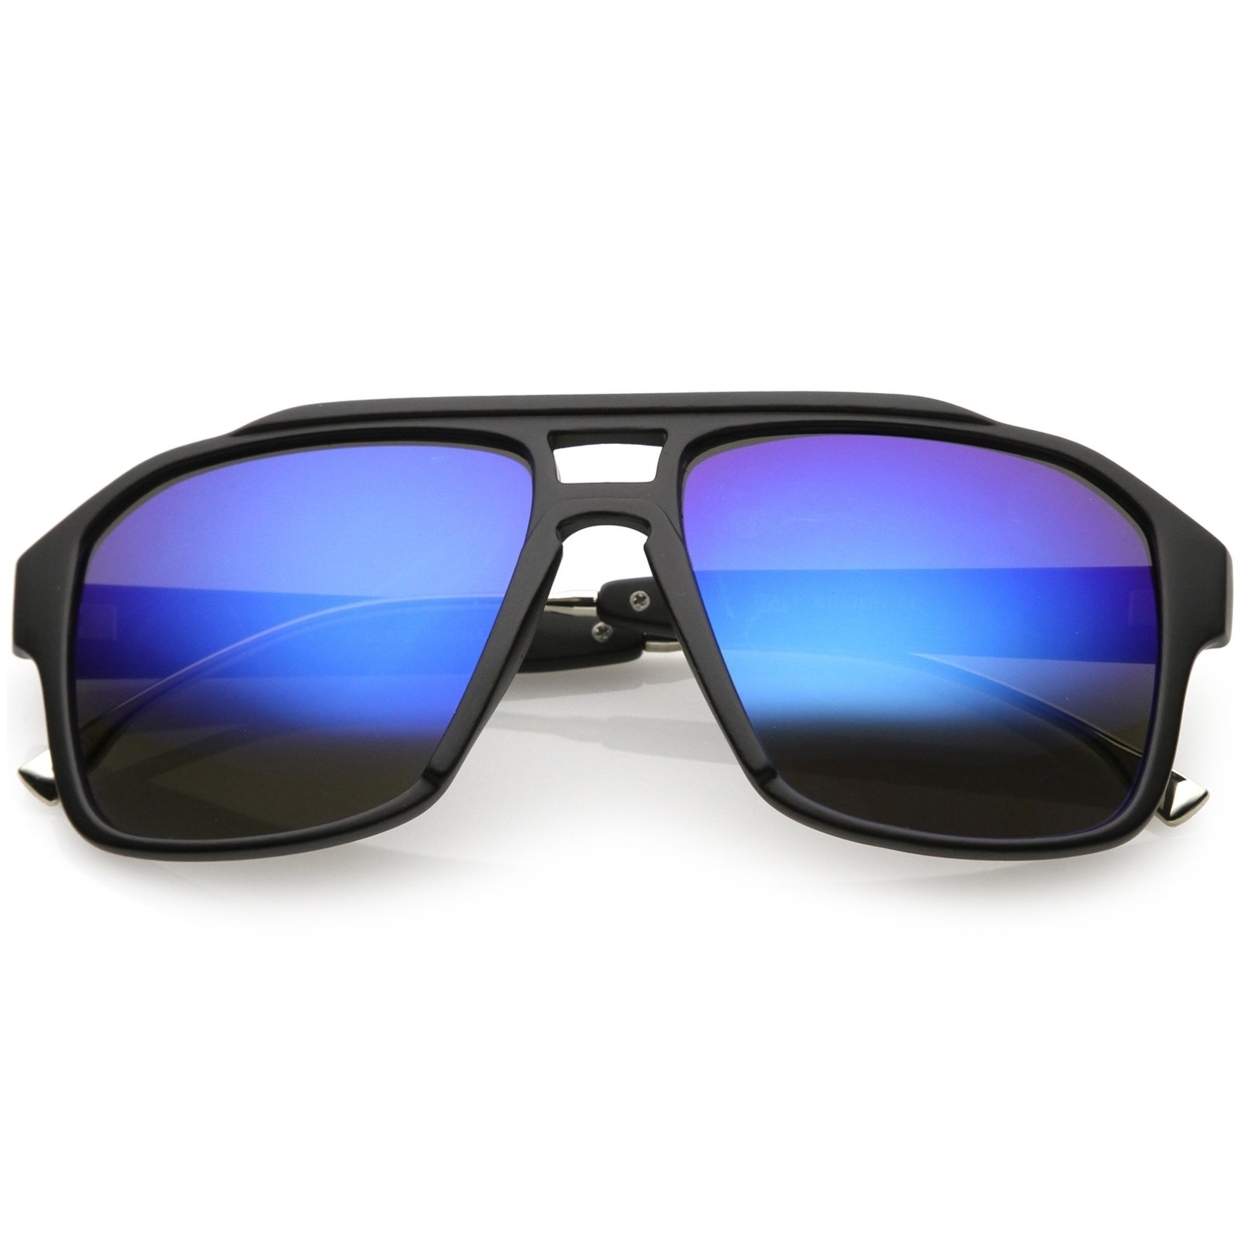 Sporty Aviator Sunglasses Flat Top Keyhole Nose Bridge Square Mirrored Lens 55mm - Matte Black / Silver Mirror